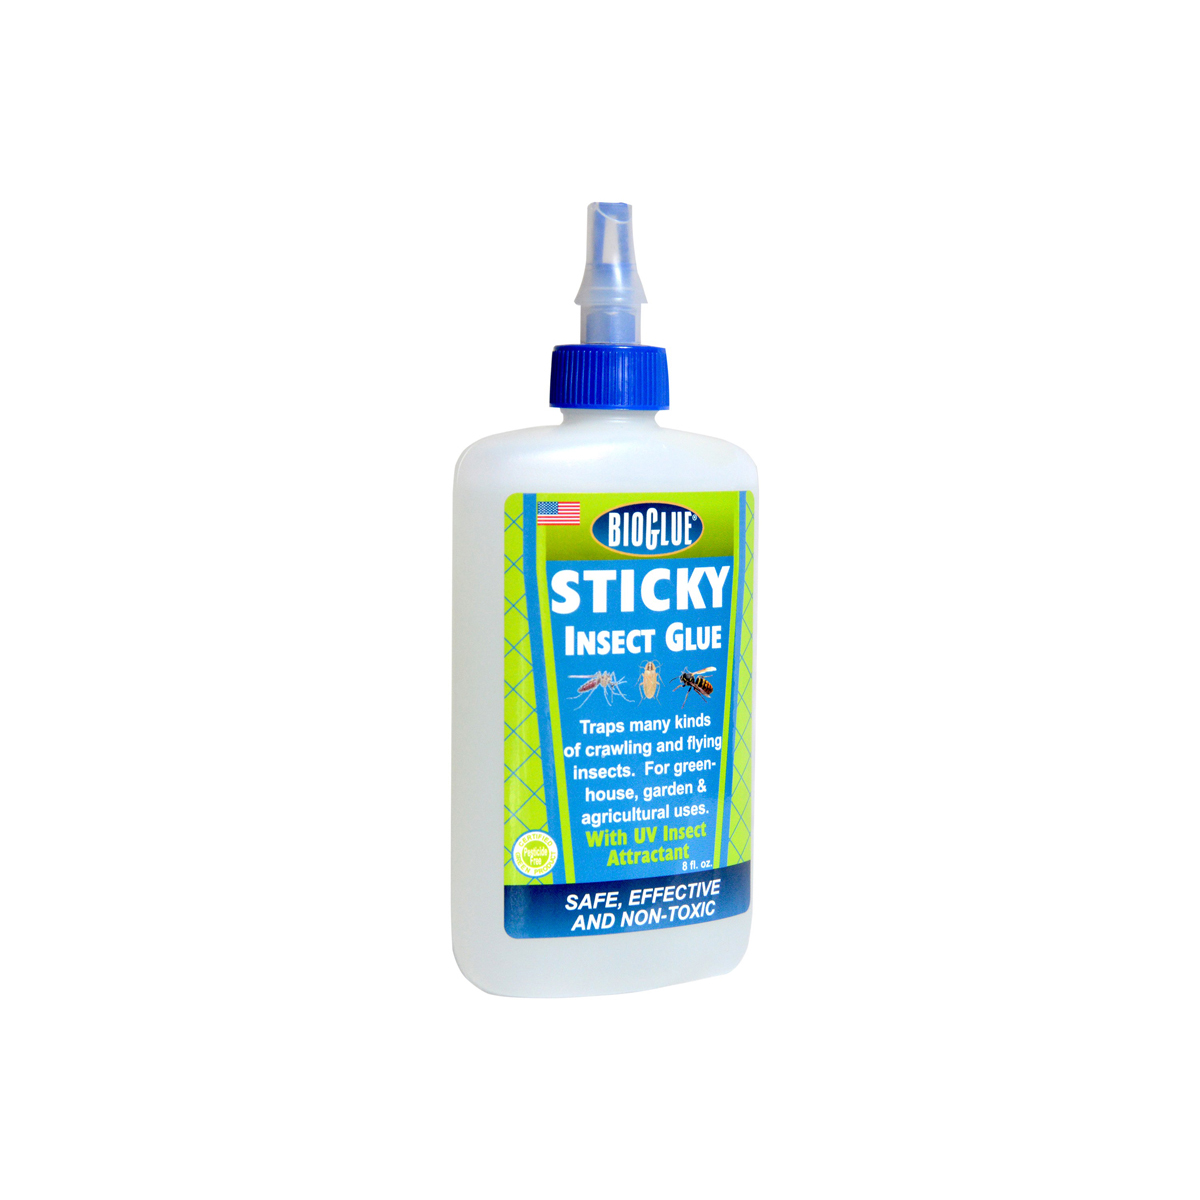 Picture of Bioglue Sticky Insect Glue 8 oz